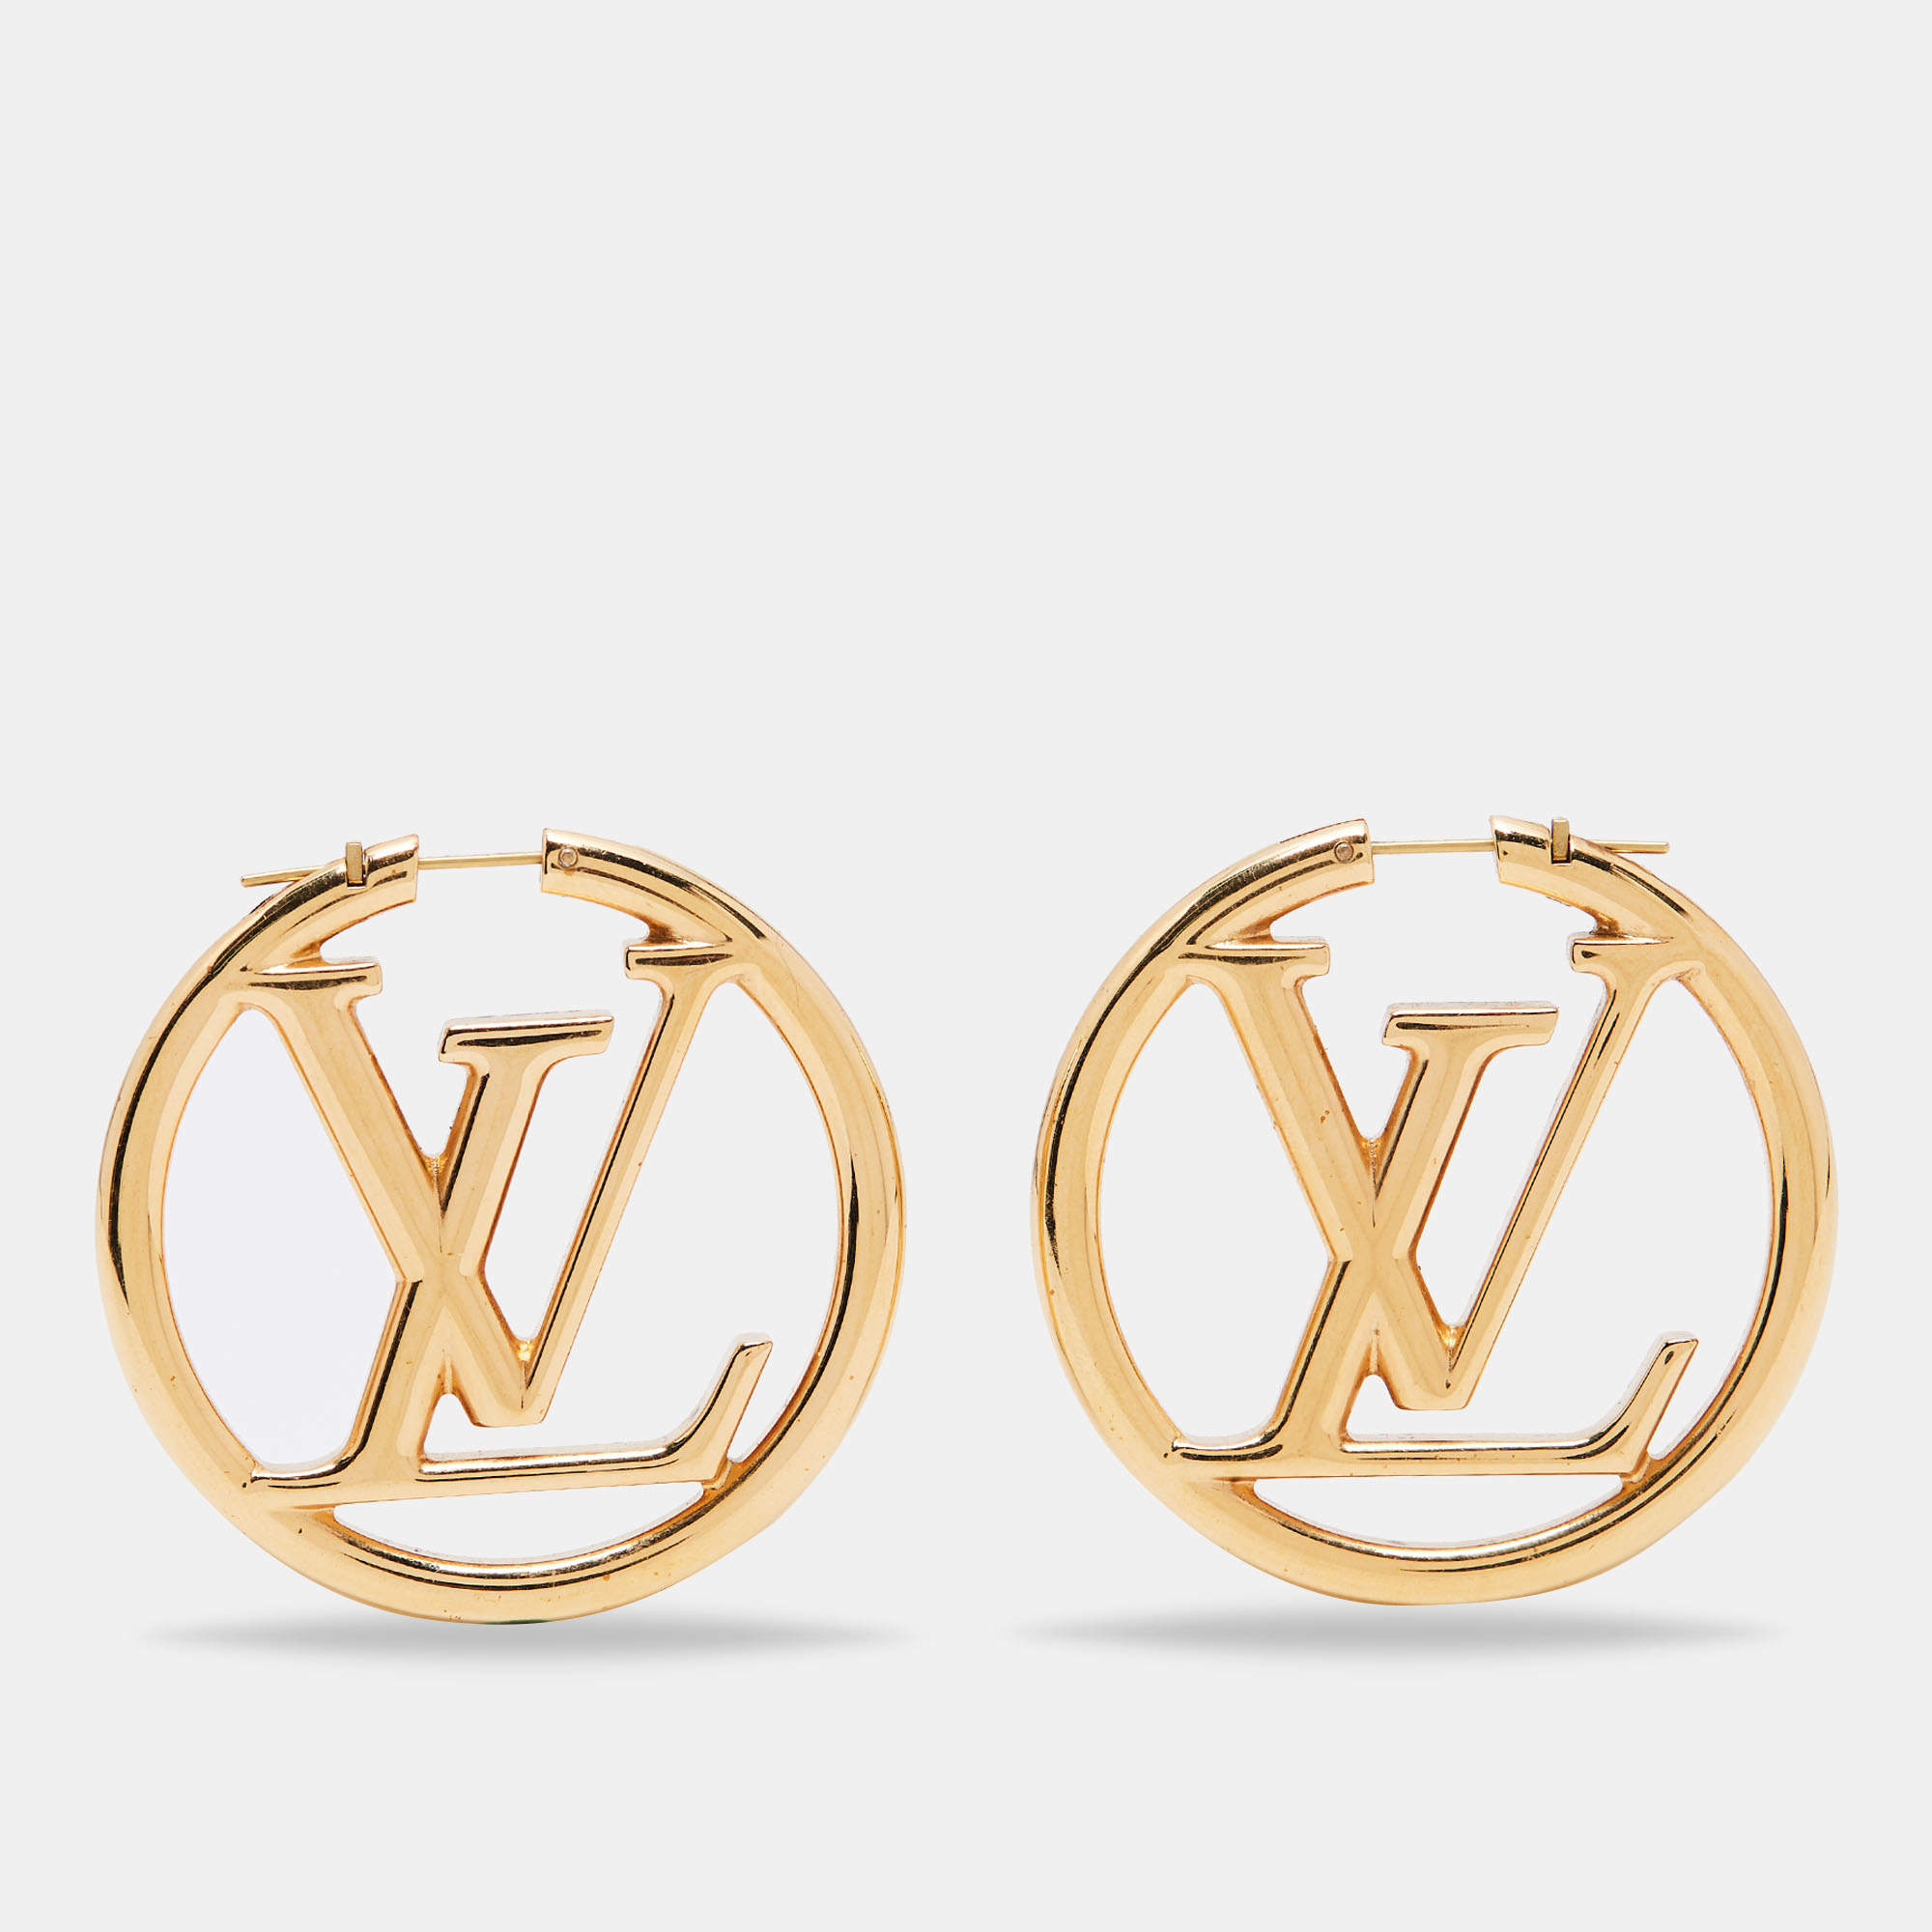 Louis Vuitton hoop earrings real vs fake. How to spot fake Louis